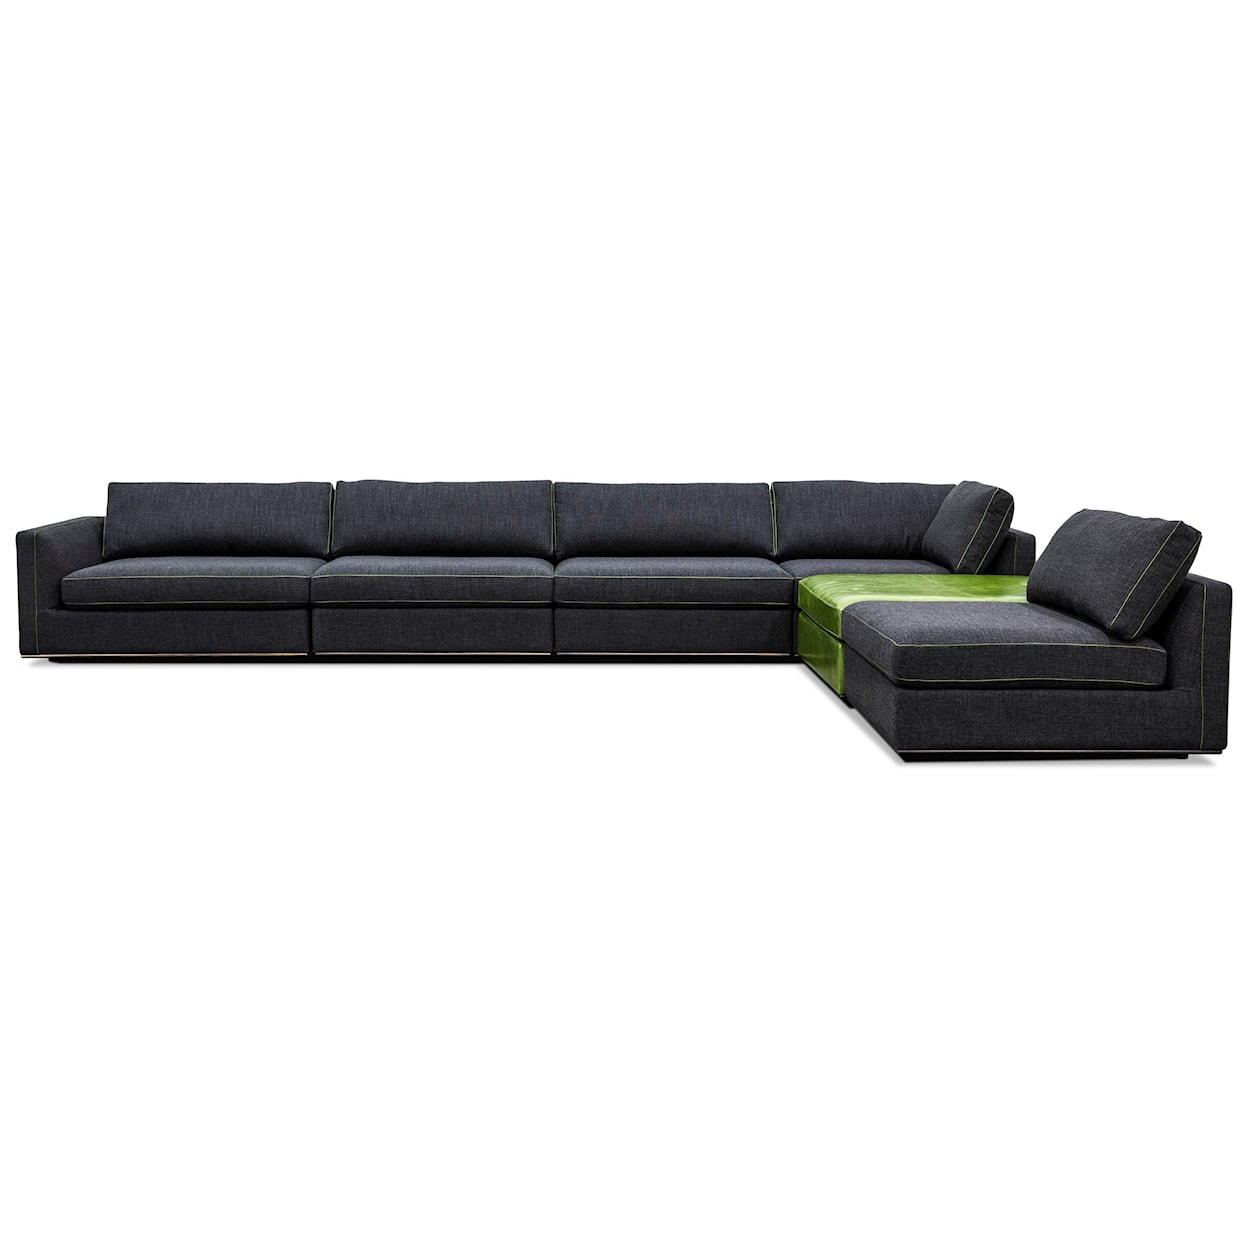 American Leather Siena 5-Seat Sectional Sofa w/ Ottoman